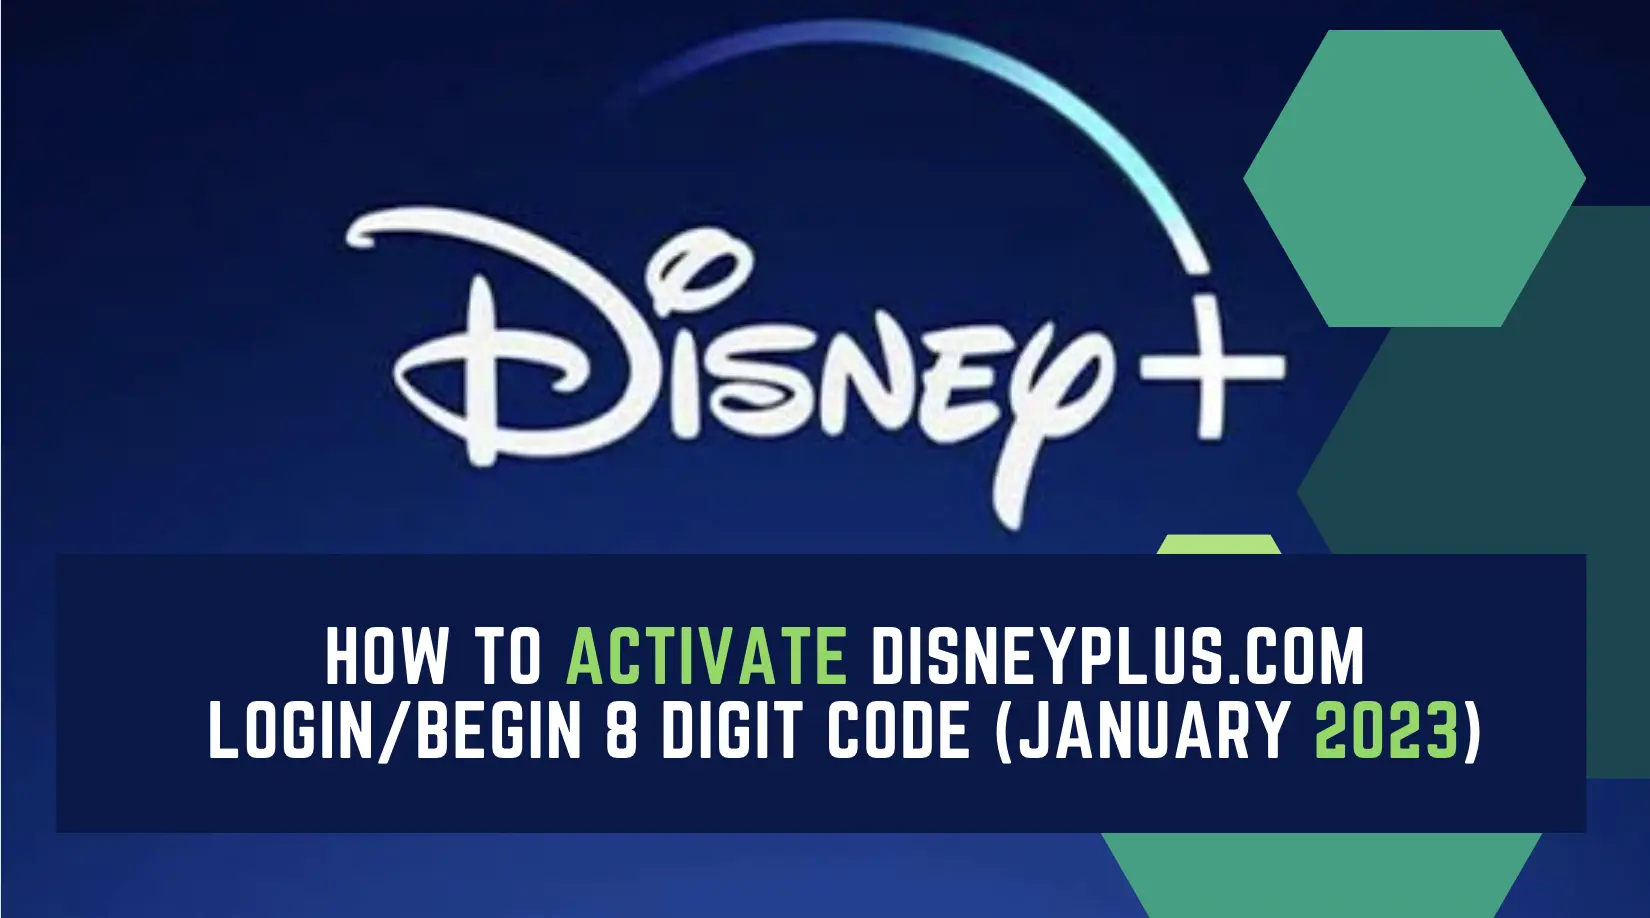 How to Activate Disneyplus.com Login/Begin 8 Digit Code (January 2023)